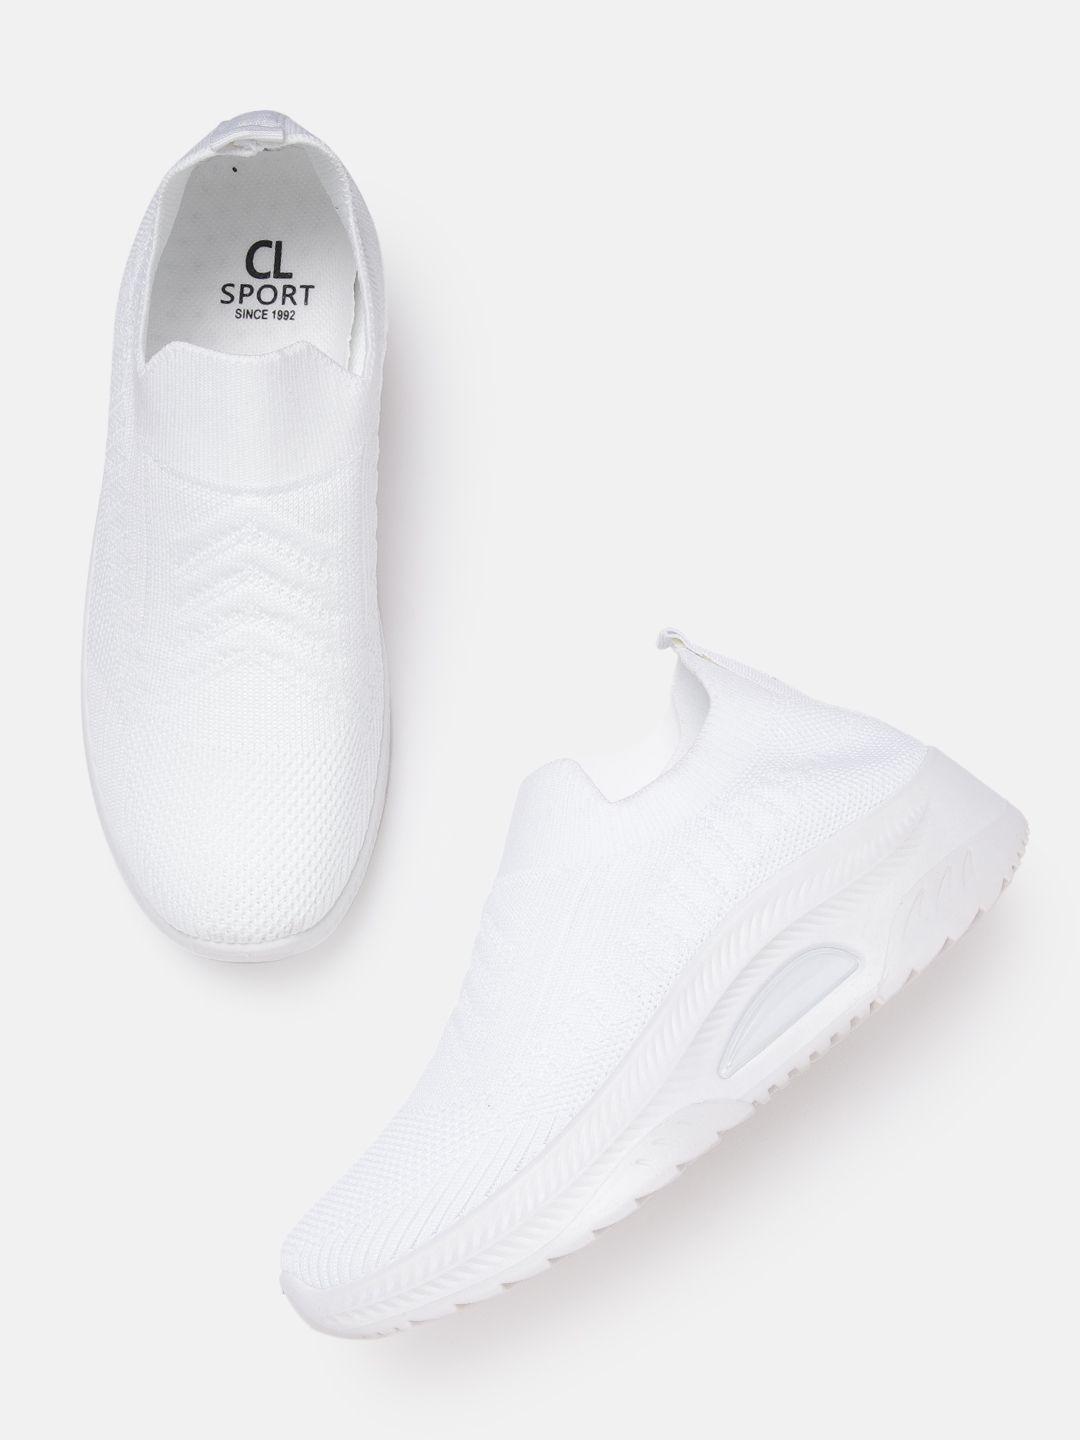 carlton london sports women white woven design slip-on sneakers